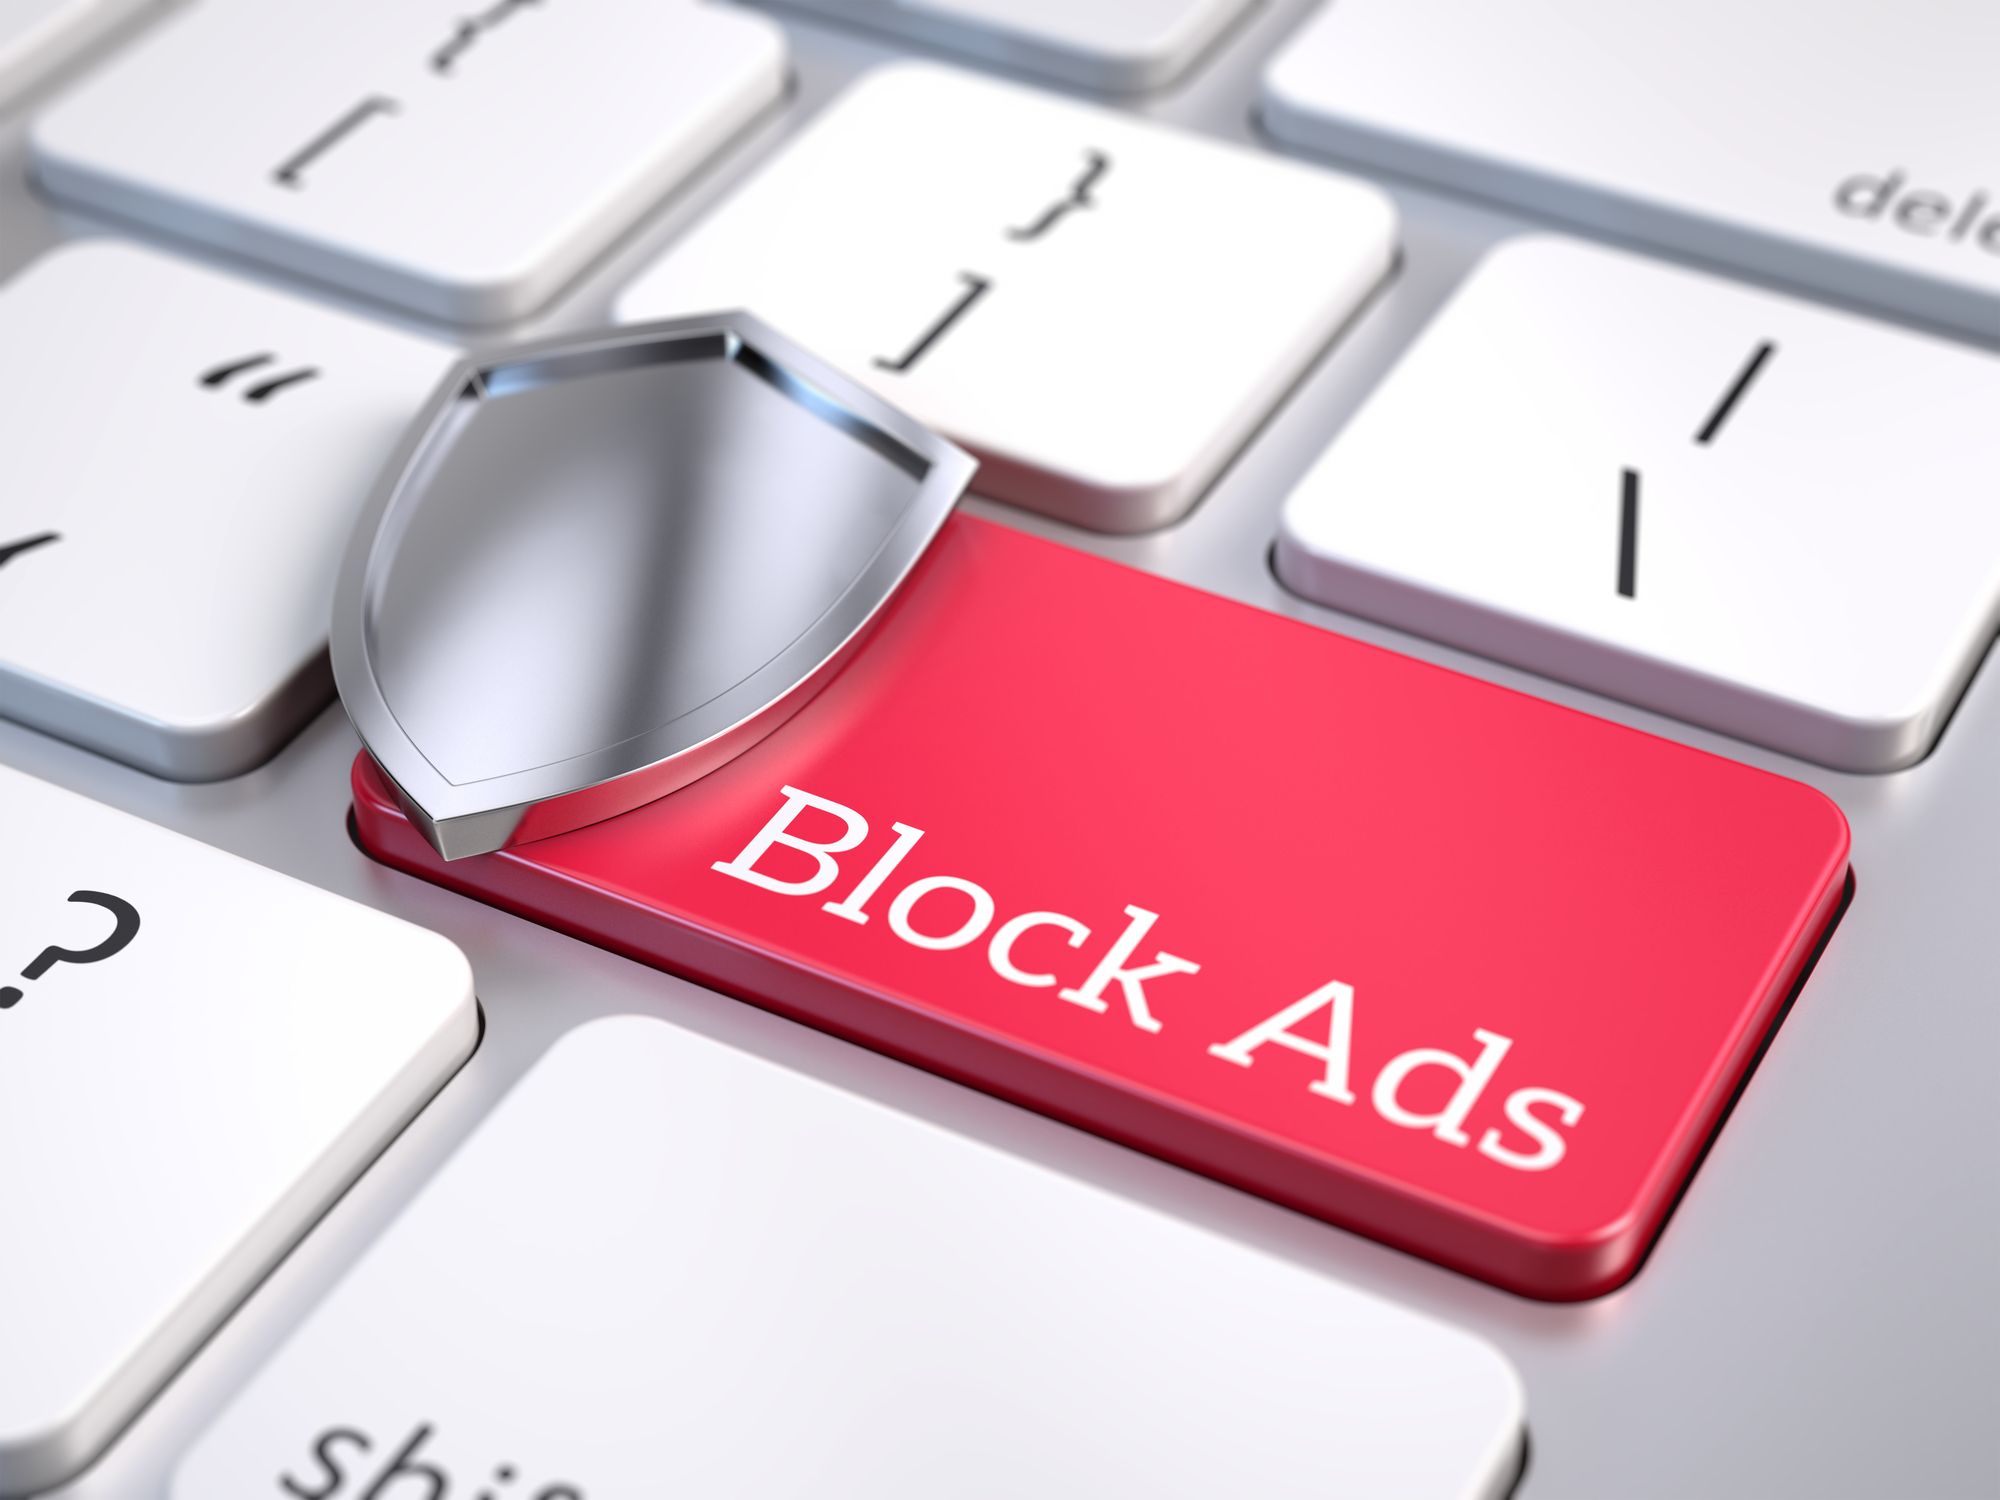 Wishful thinking: blocking all ads with a single keystroke